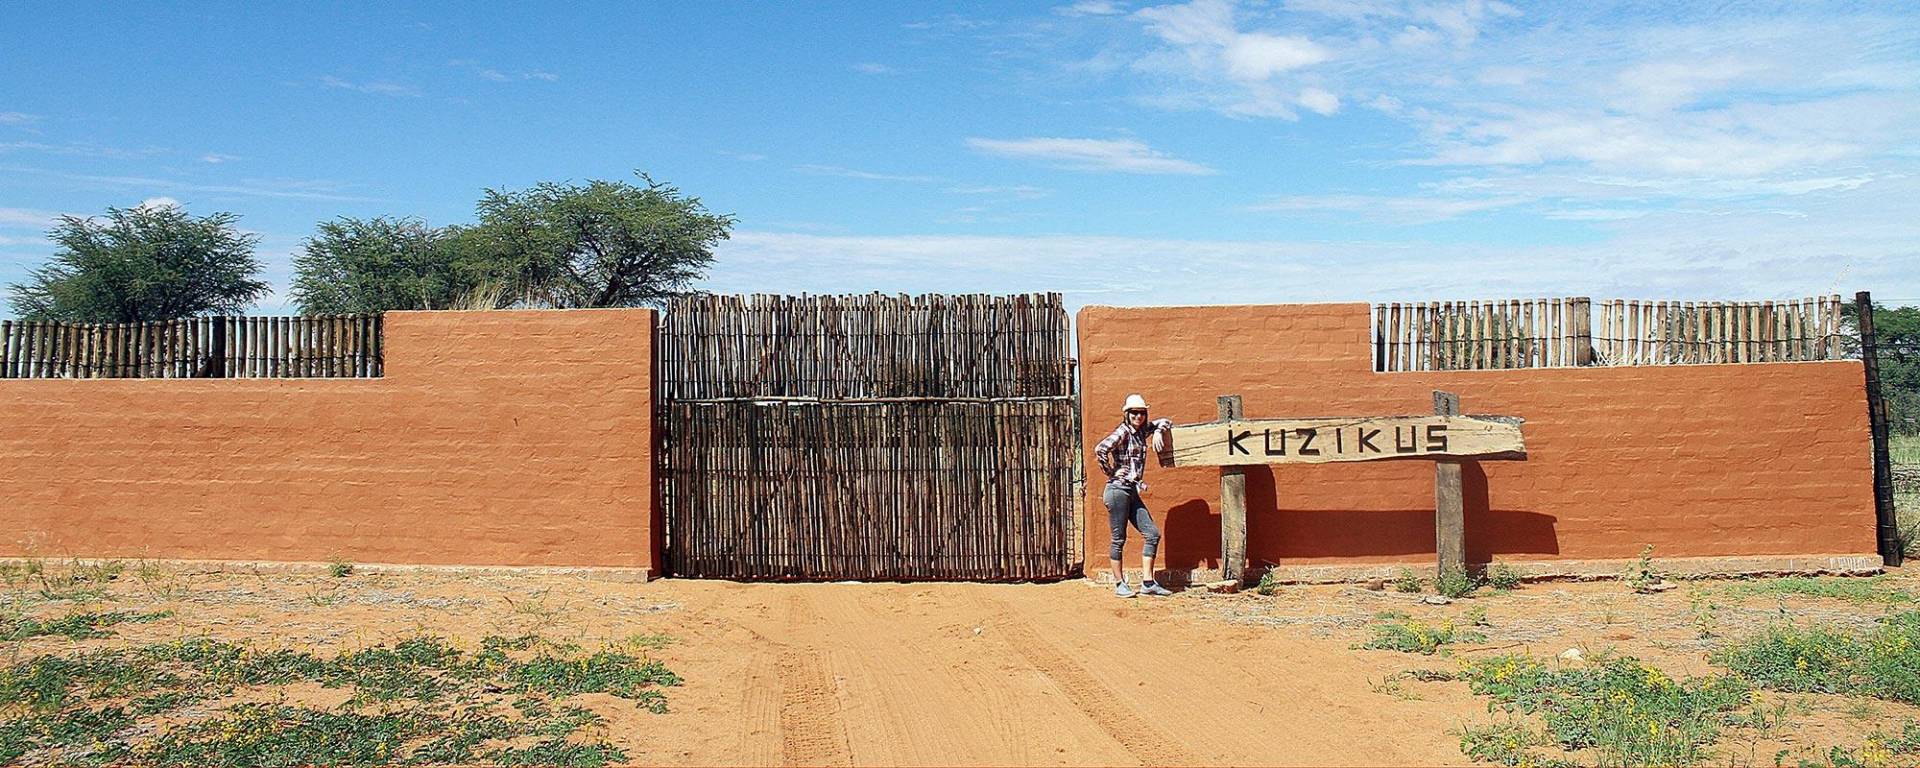 Kuzikus entrance gate in the Kalahari